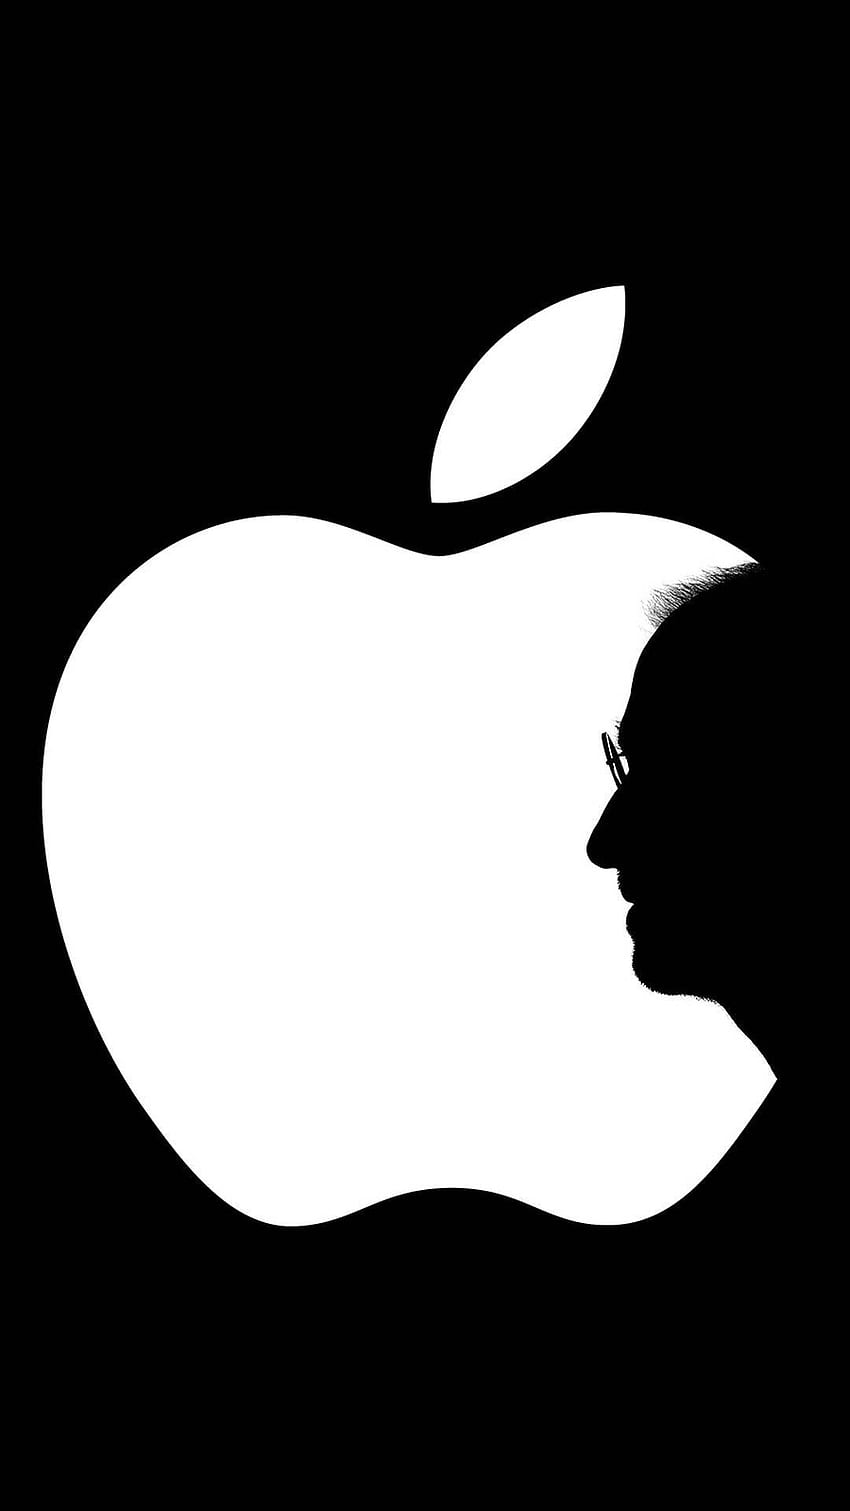 Steve Jobs Wallpapers - Wallpaper Cave